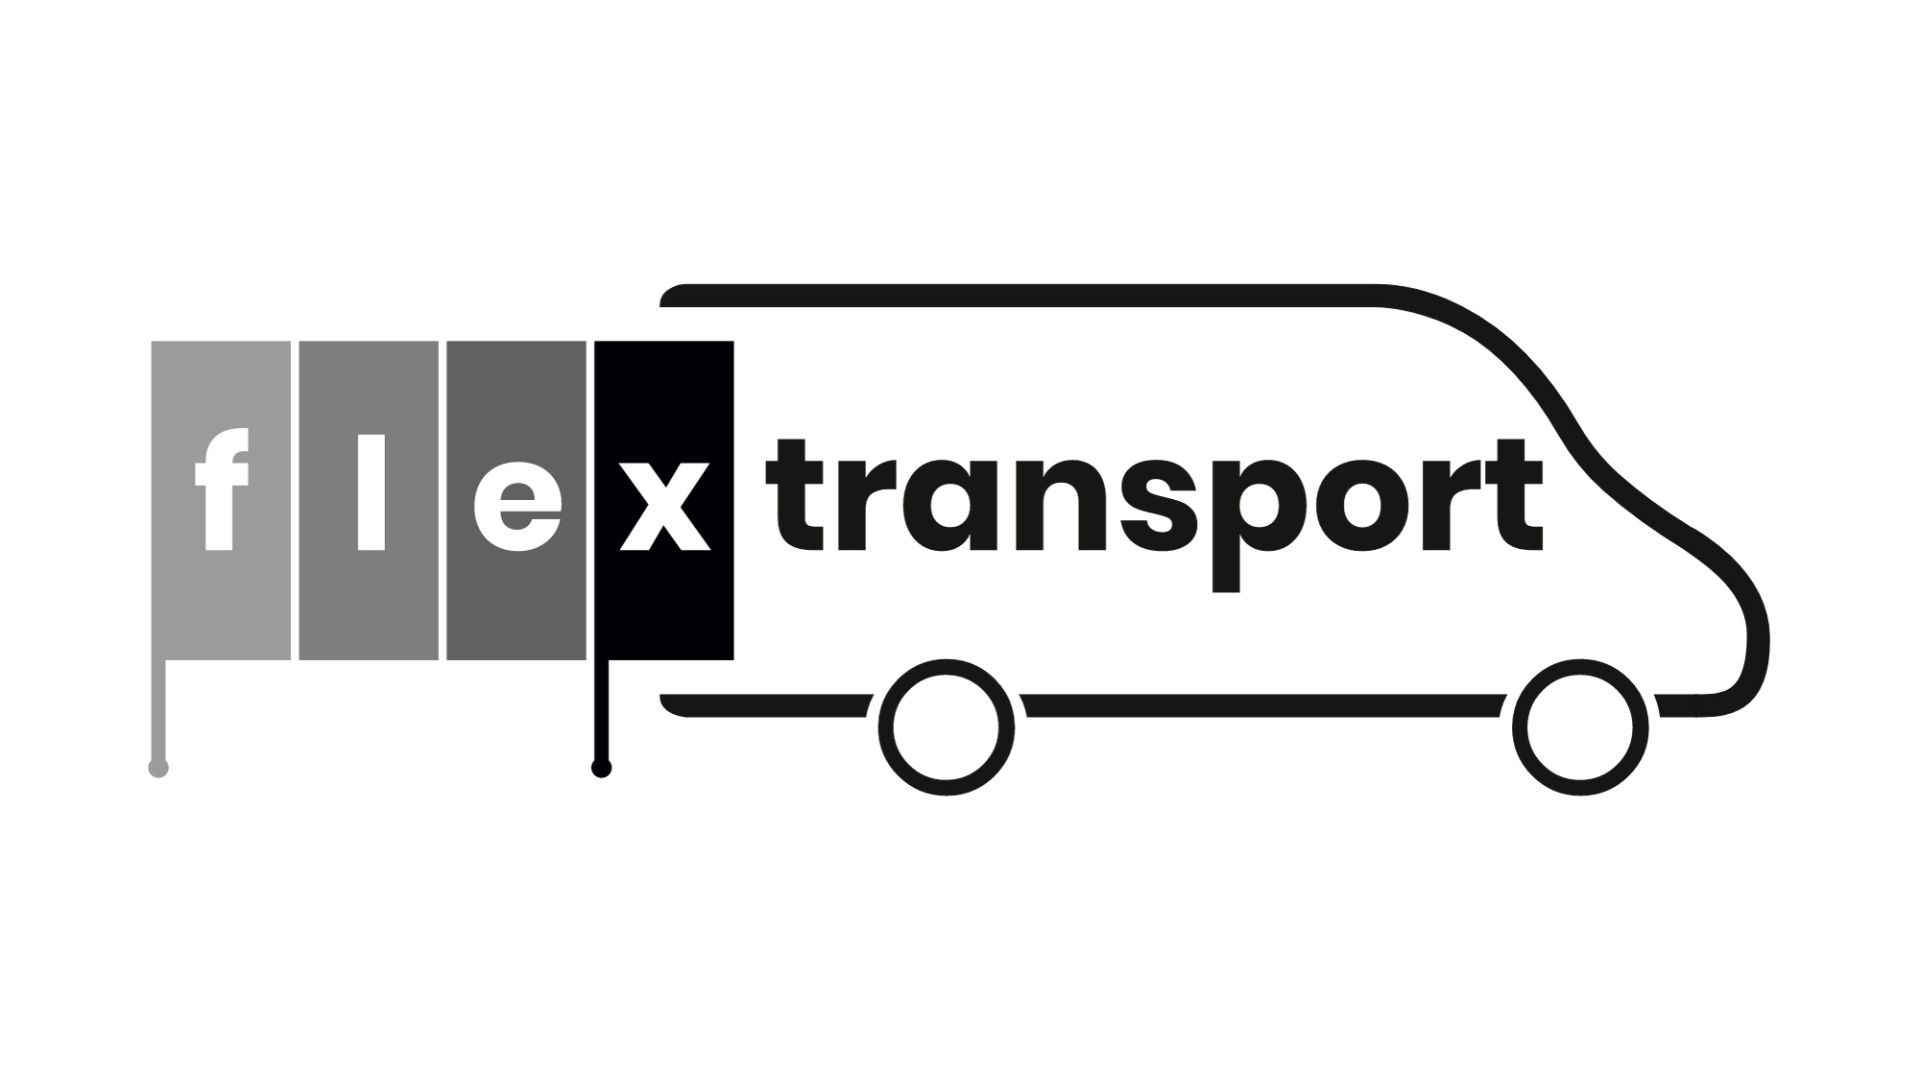 Flextransport